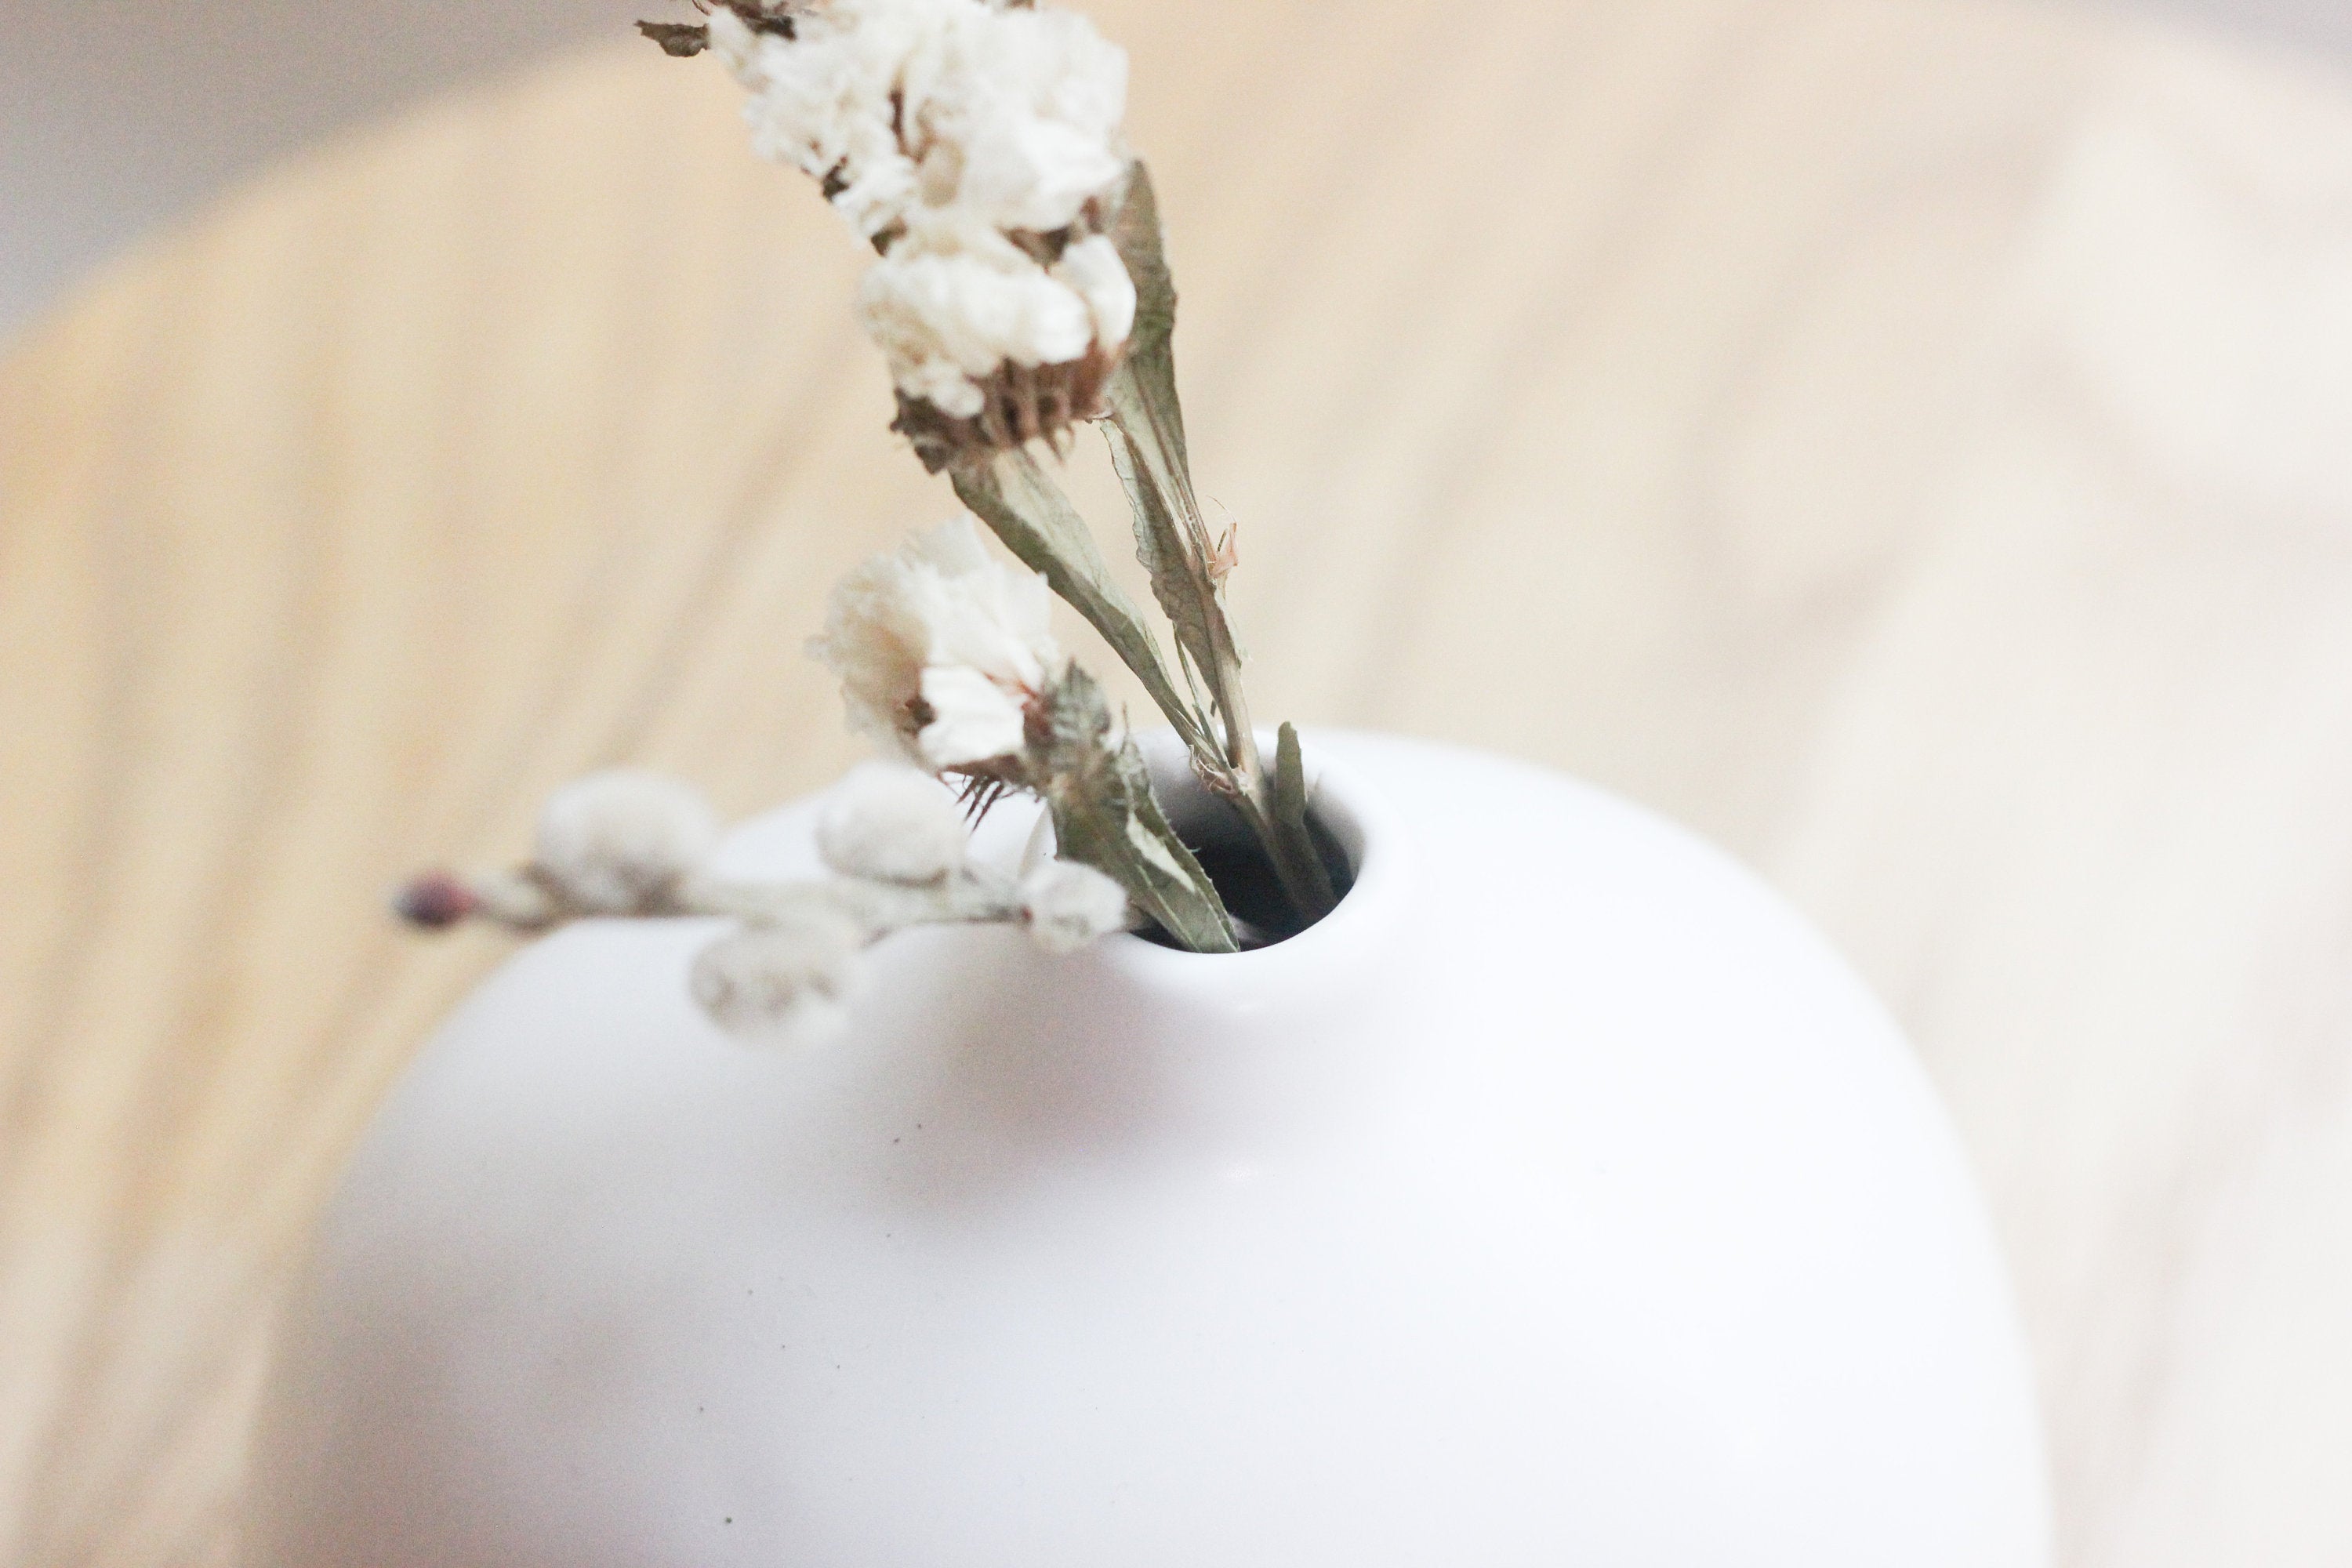 Modern Bud Vases for Dried Flowers in Matte White